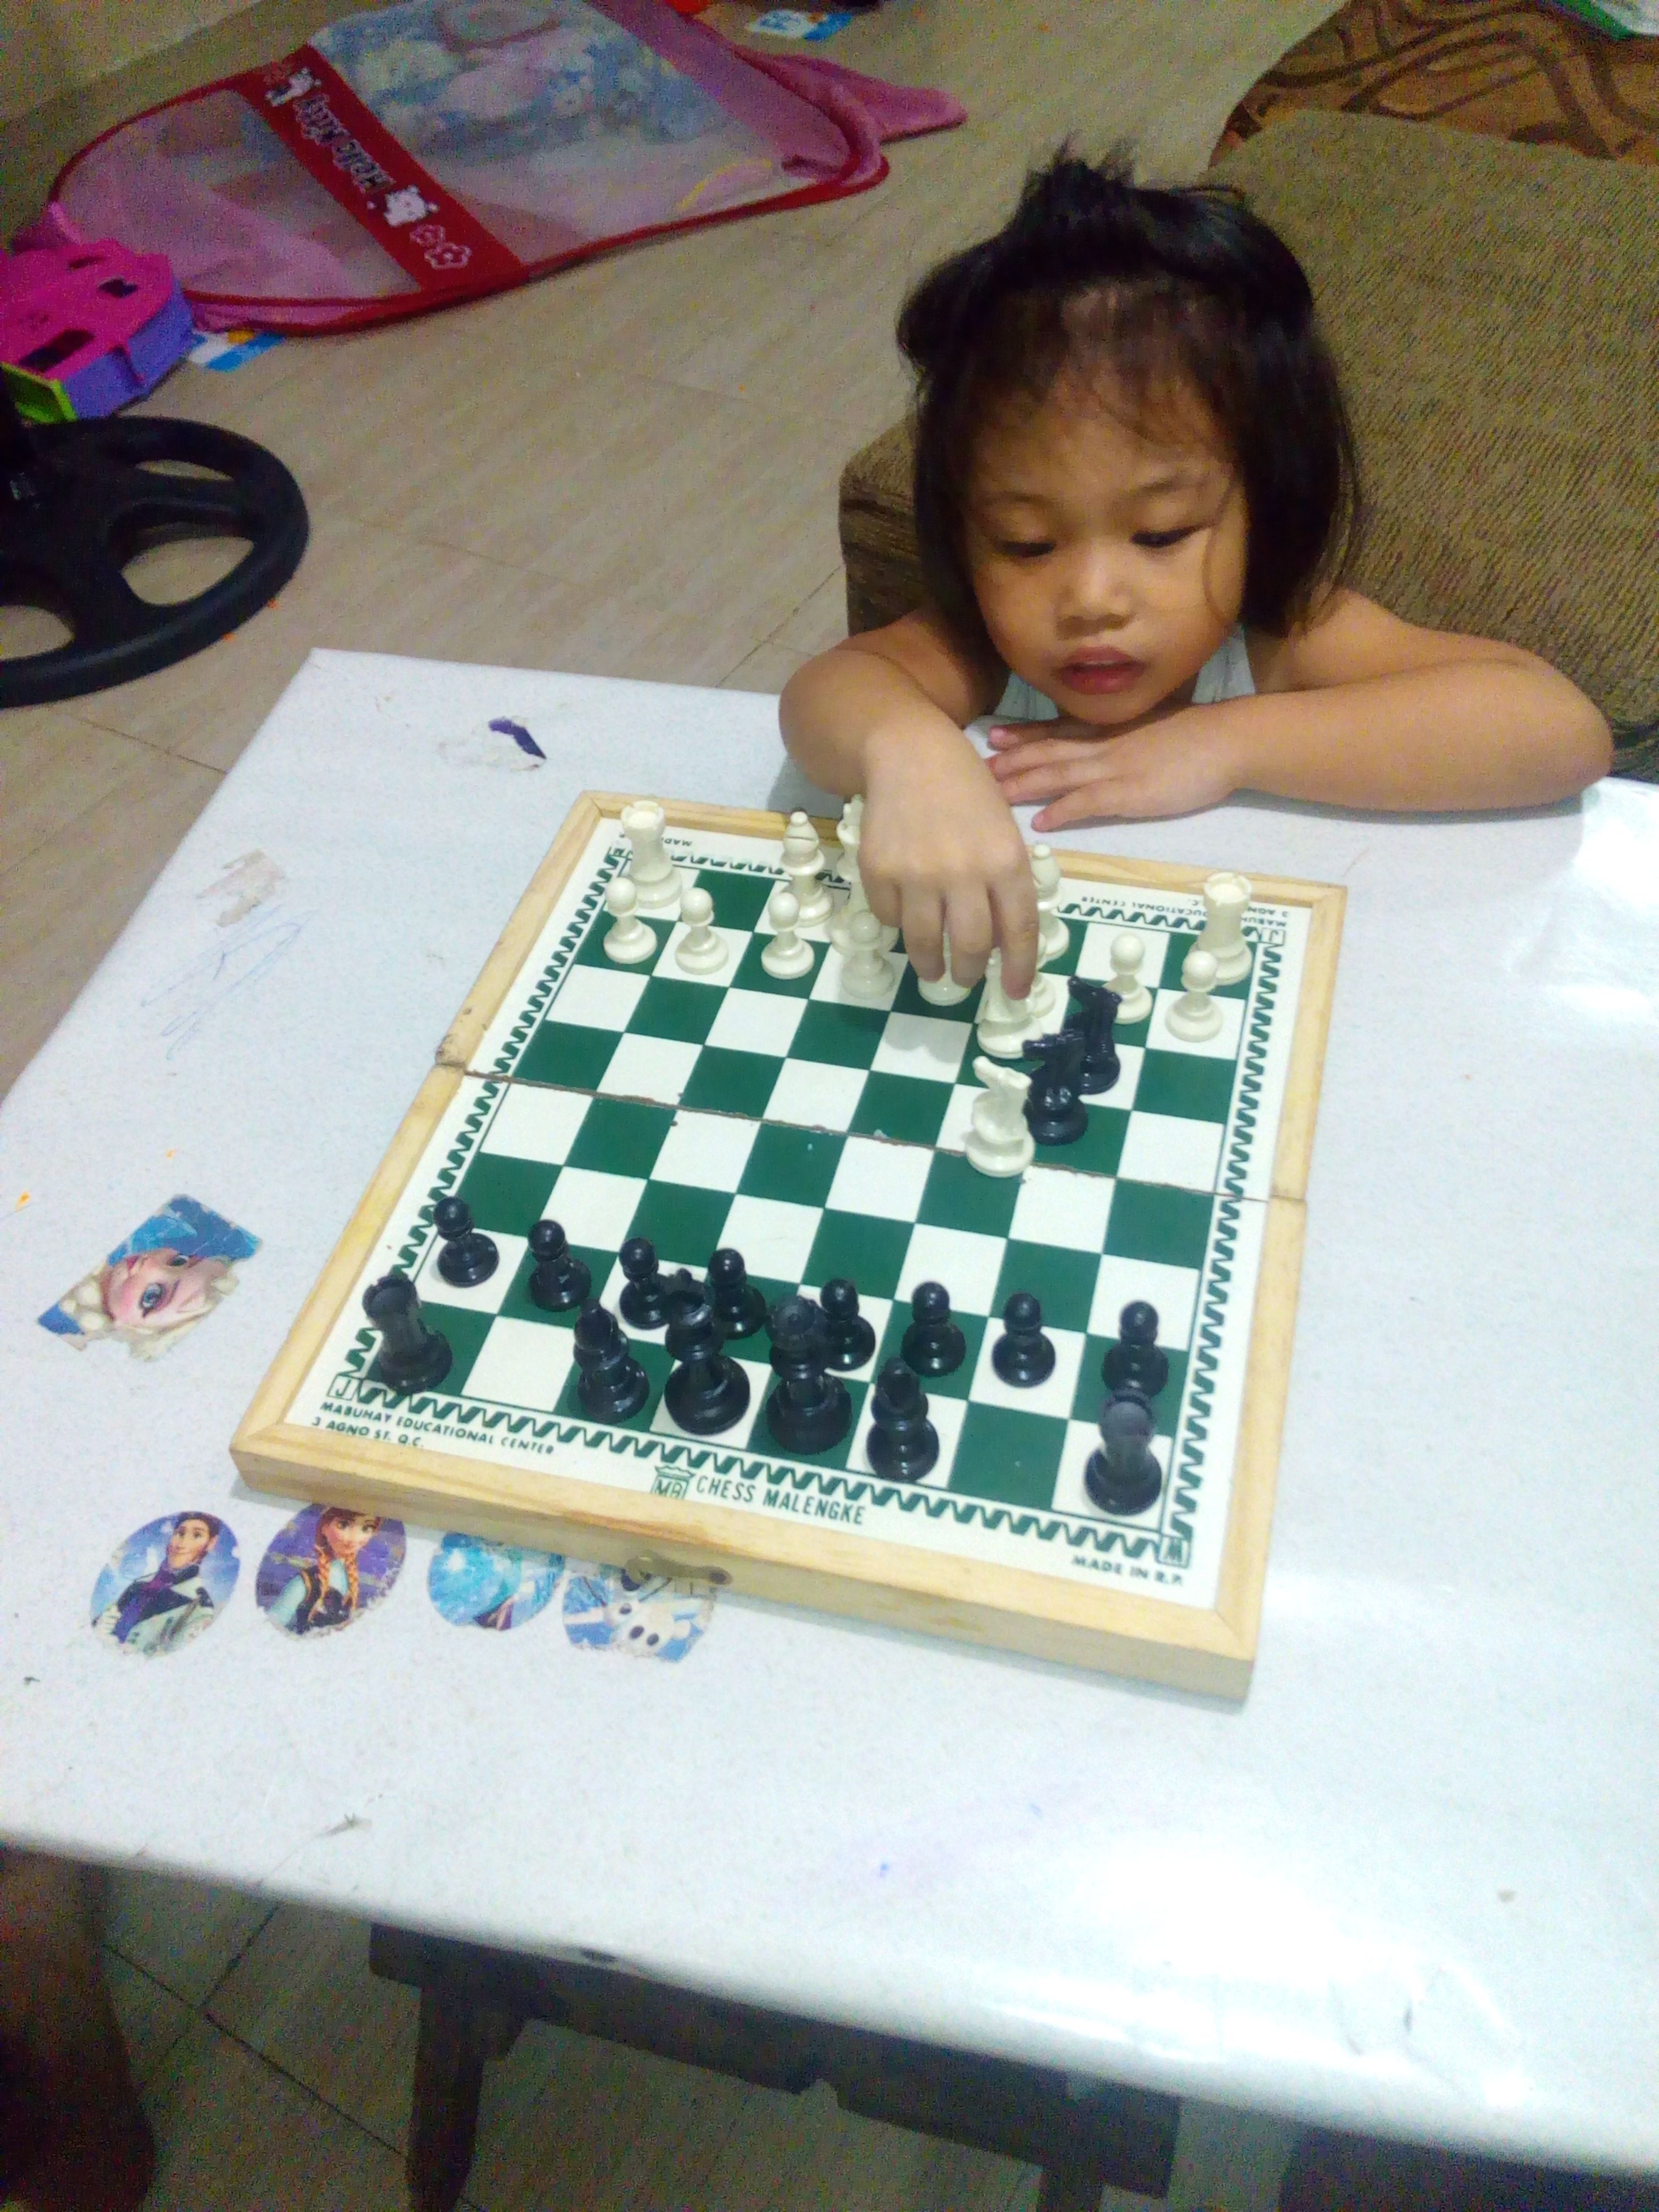 Kids crushed me at chess blog post's hero image